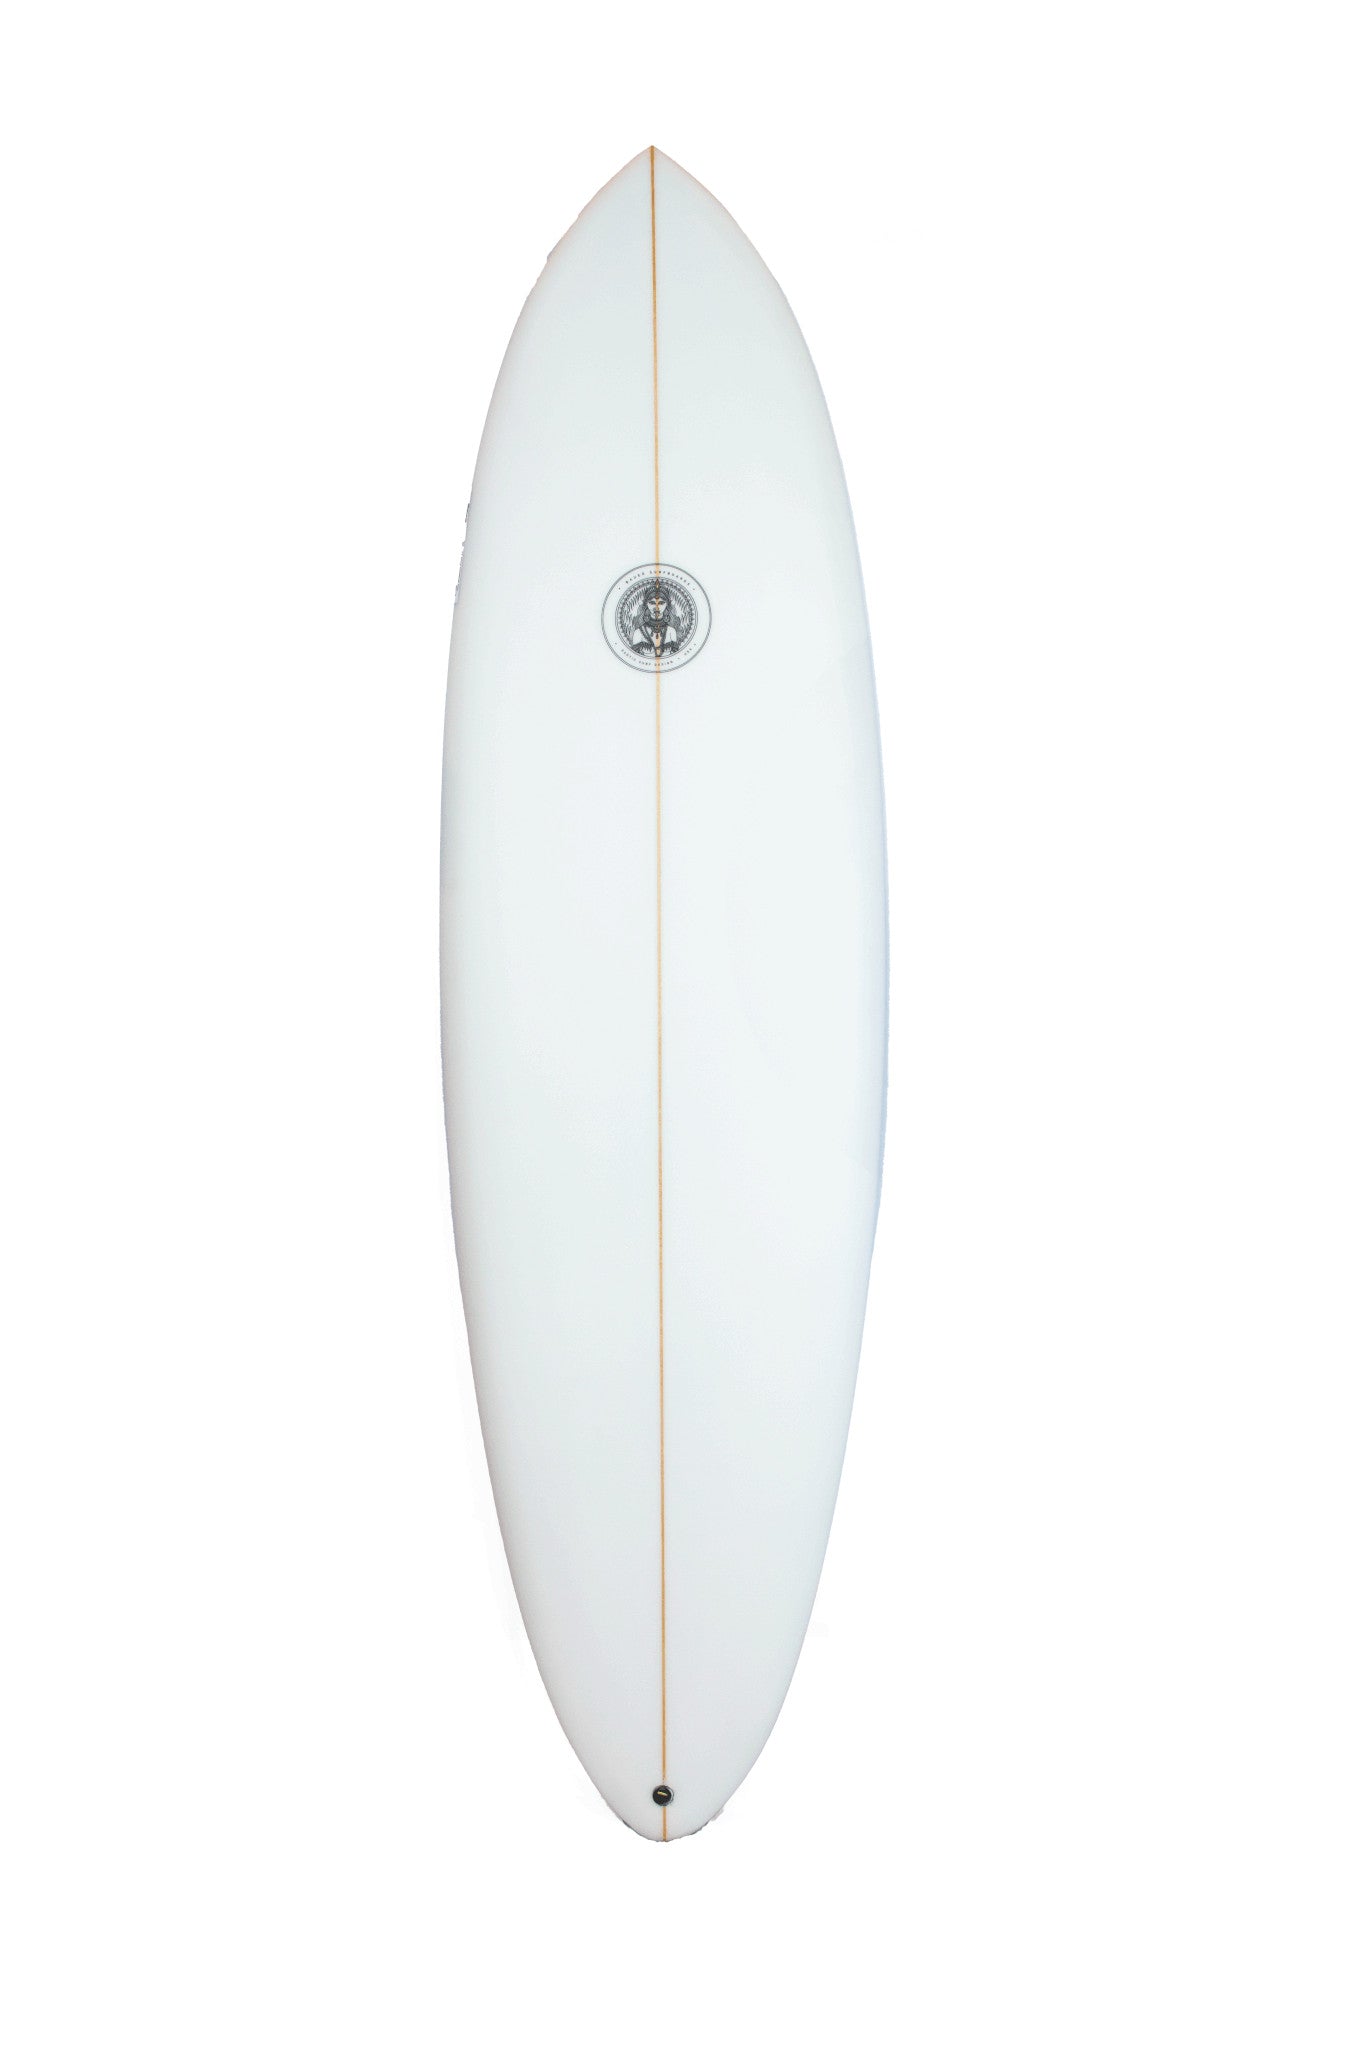 6'6" Bauer Surfboards Channeled Twin - Urban Surf